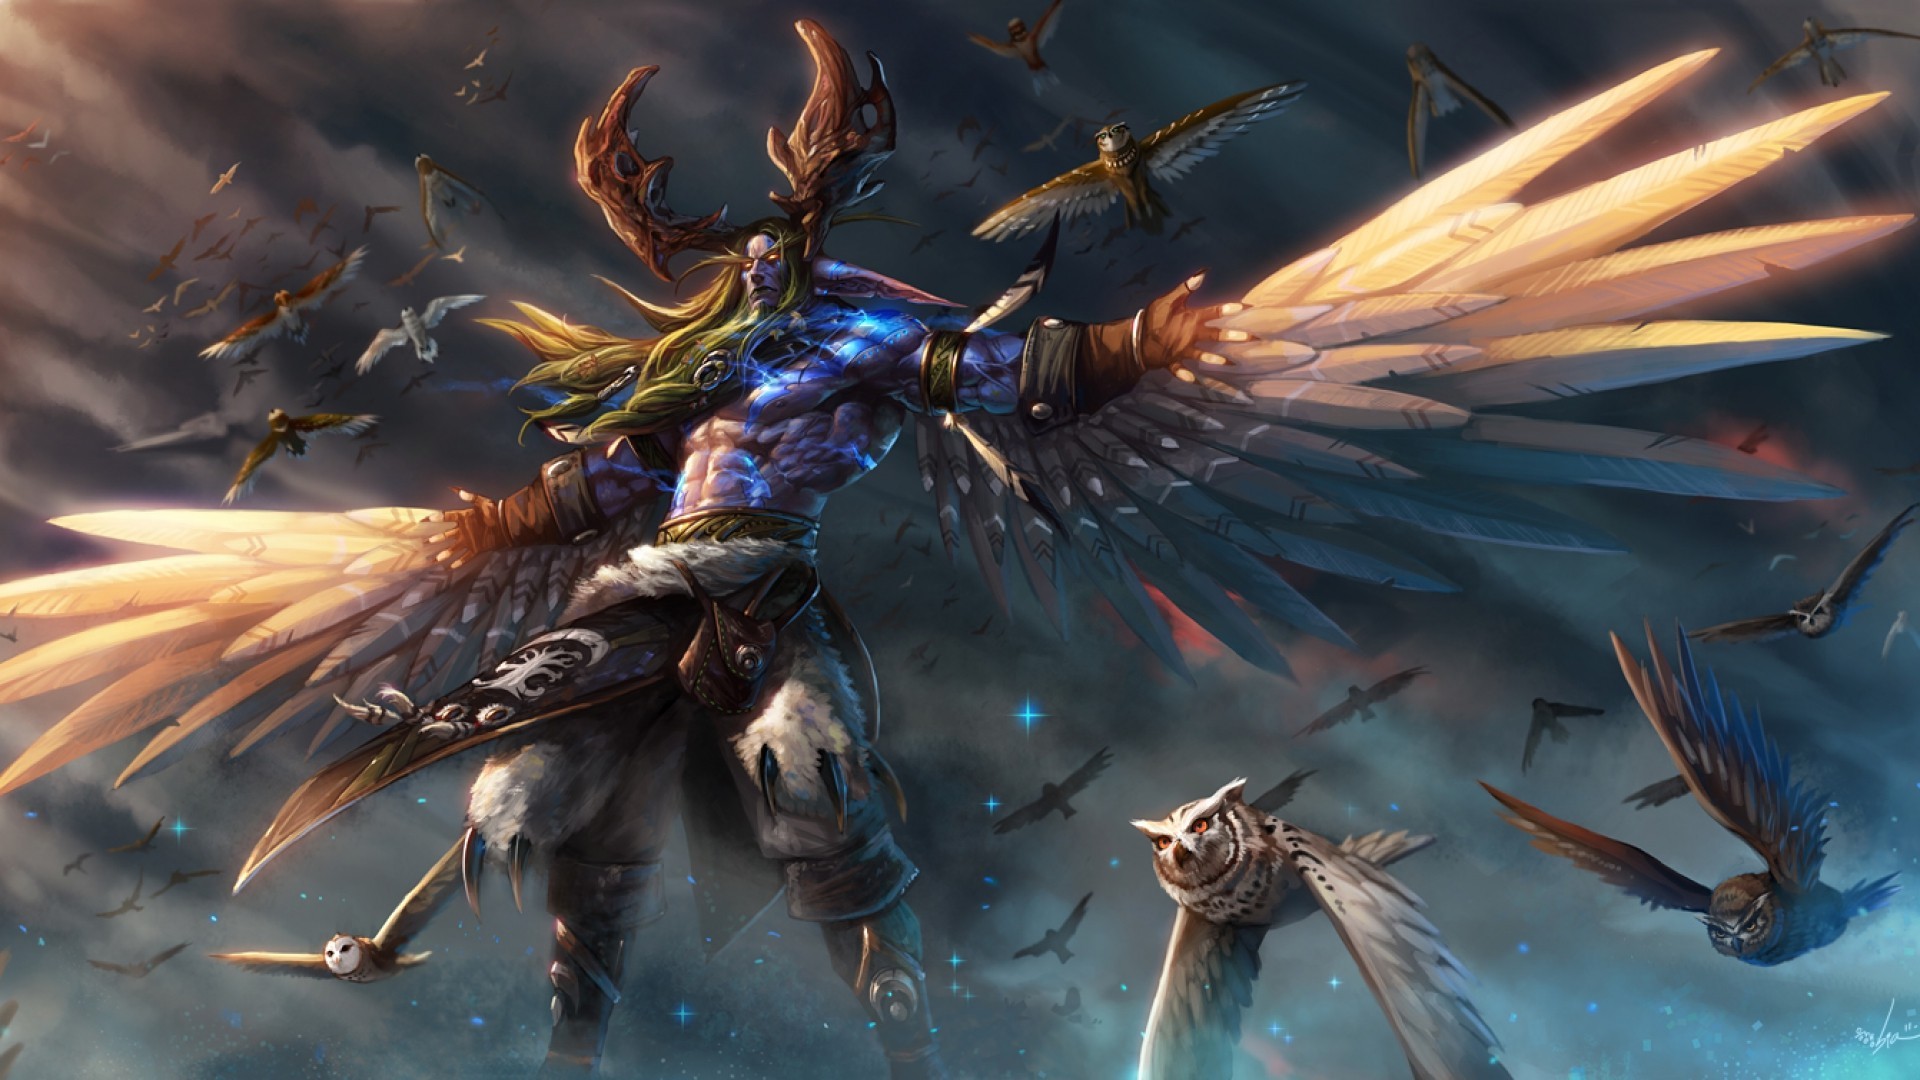 General 1920x1080 Malfurion Stormrage World of Warcraft video games wings birds fantasy art druids PC gaming video game art